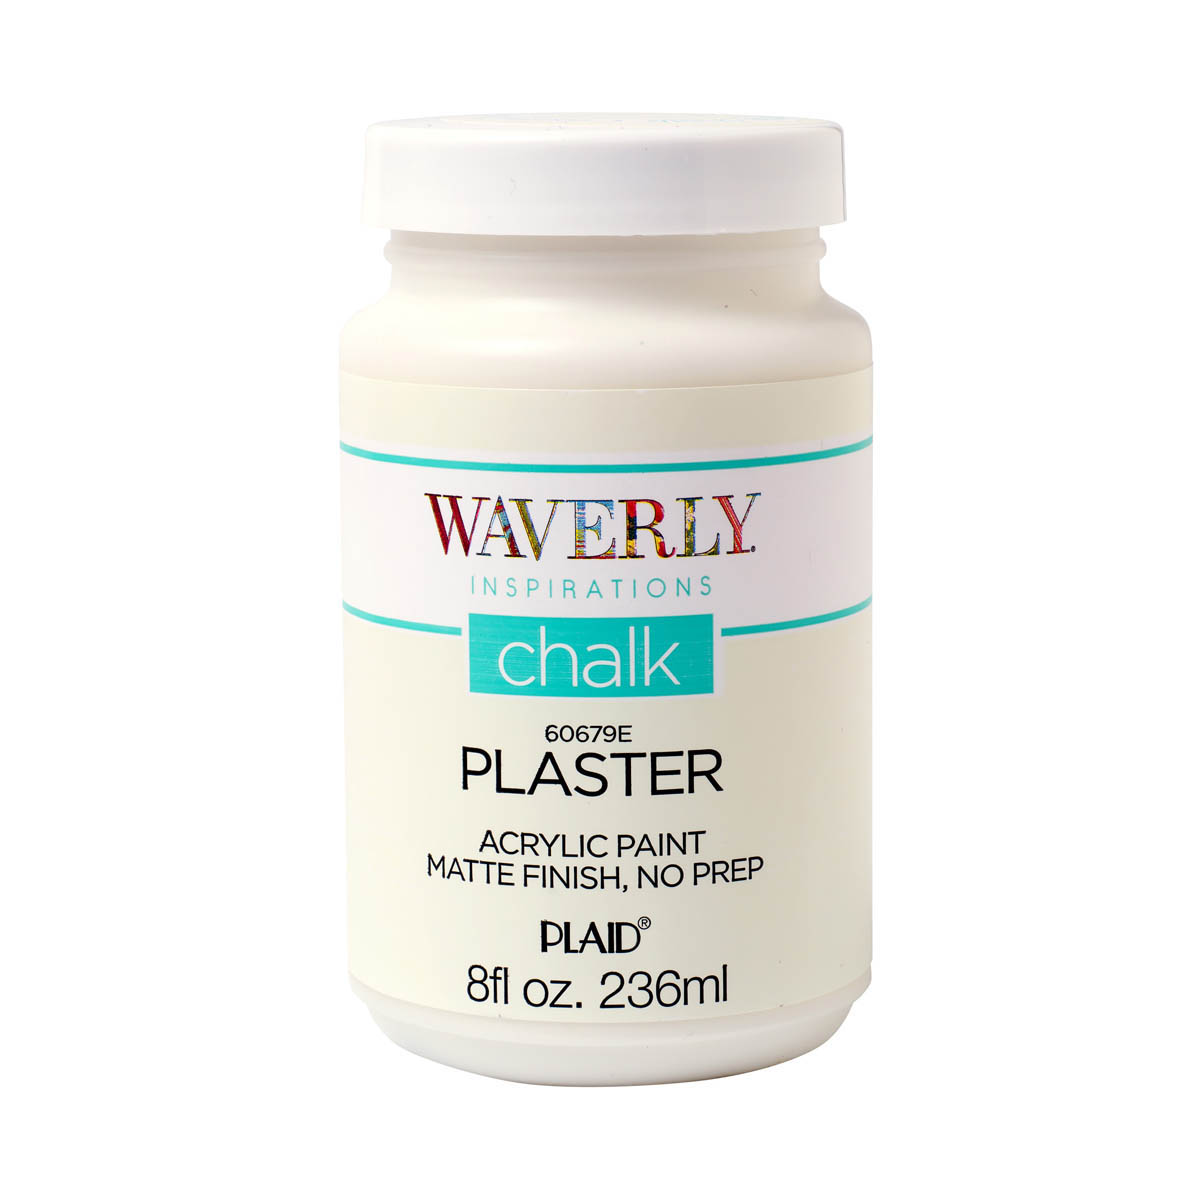 Shop Plaid Waverly ® Inspirations Chalk Acrylic Paint - Plaster, 8